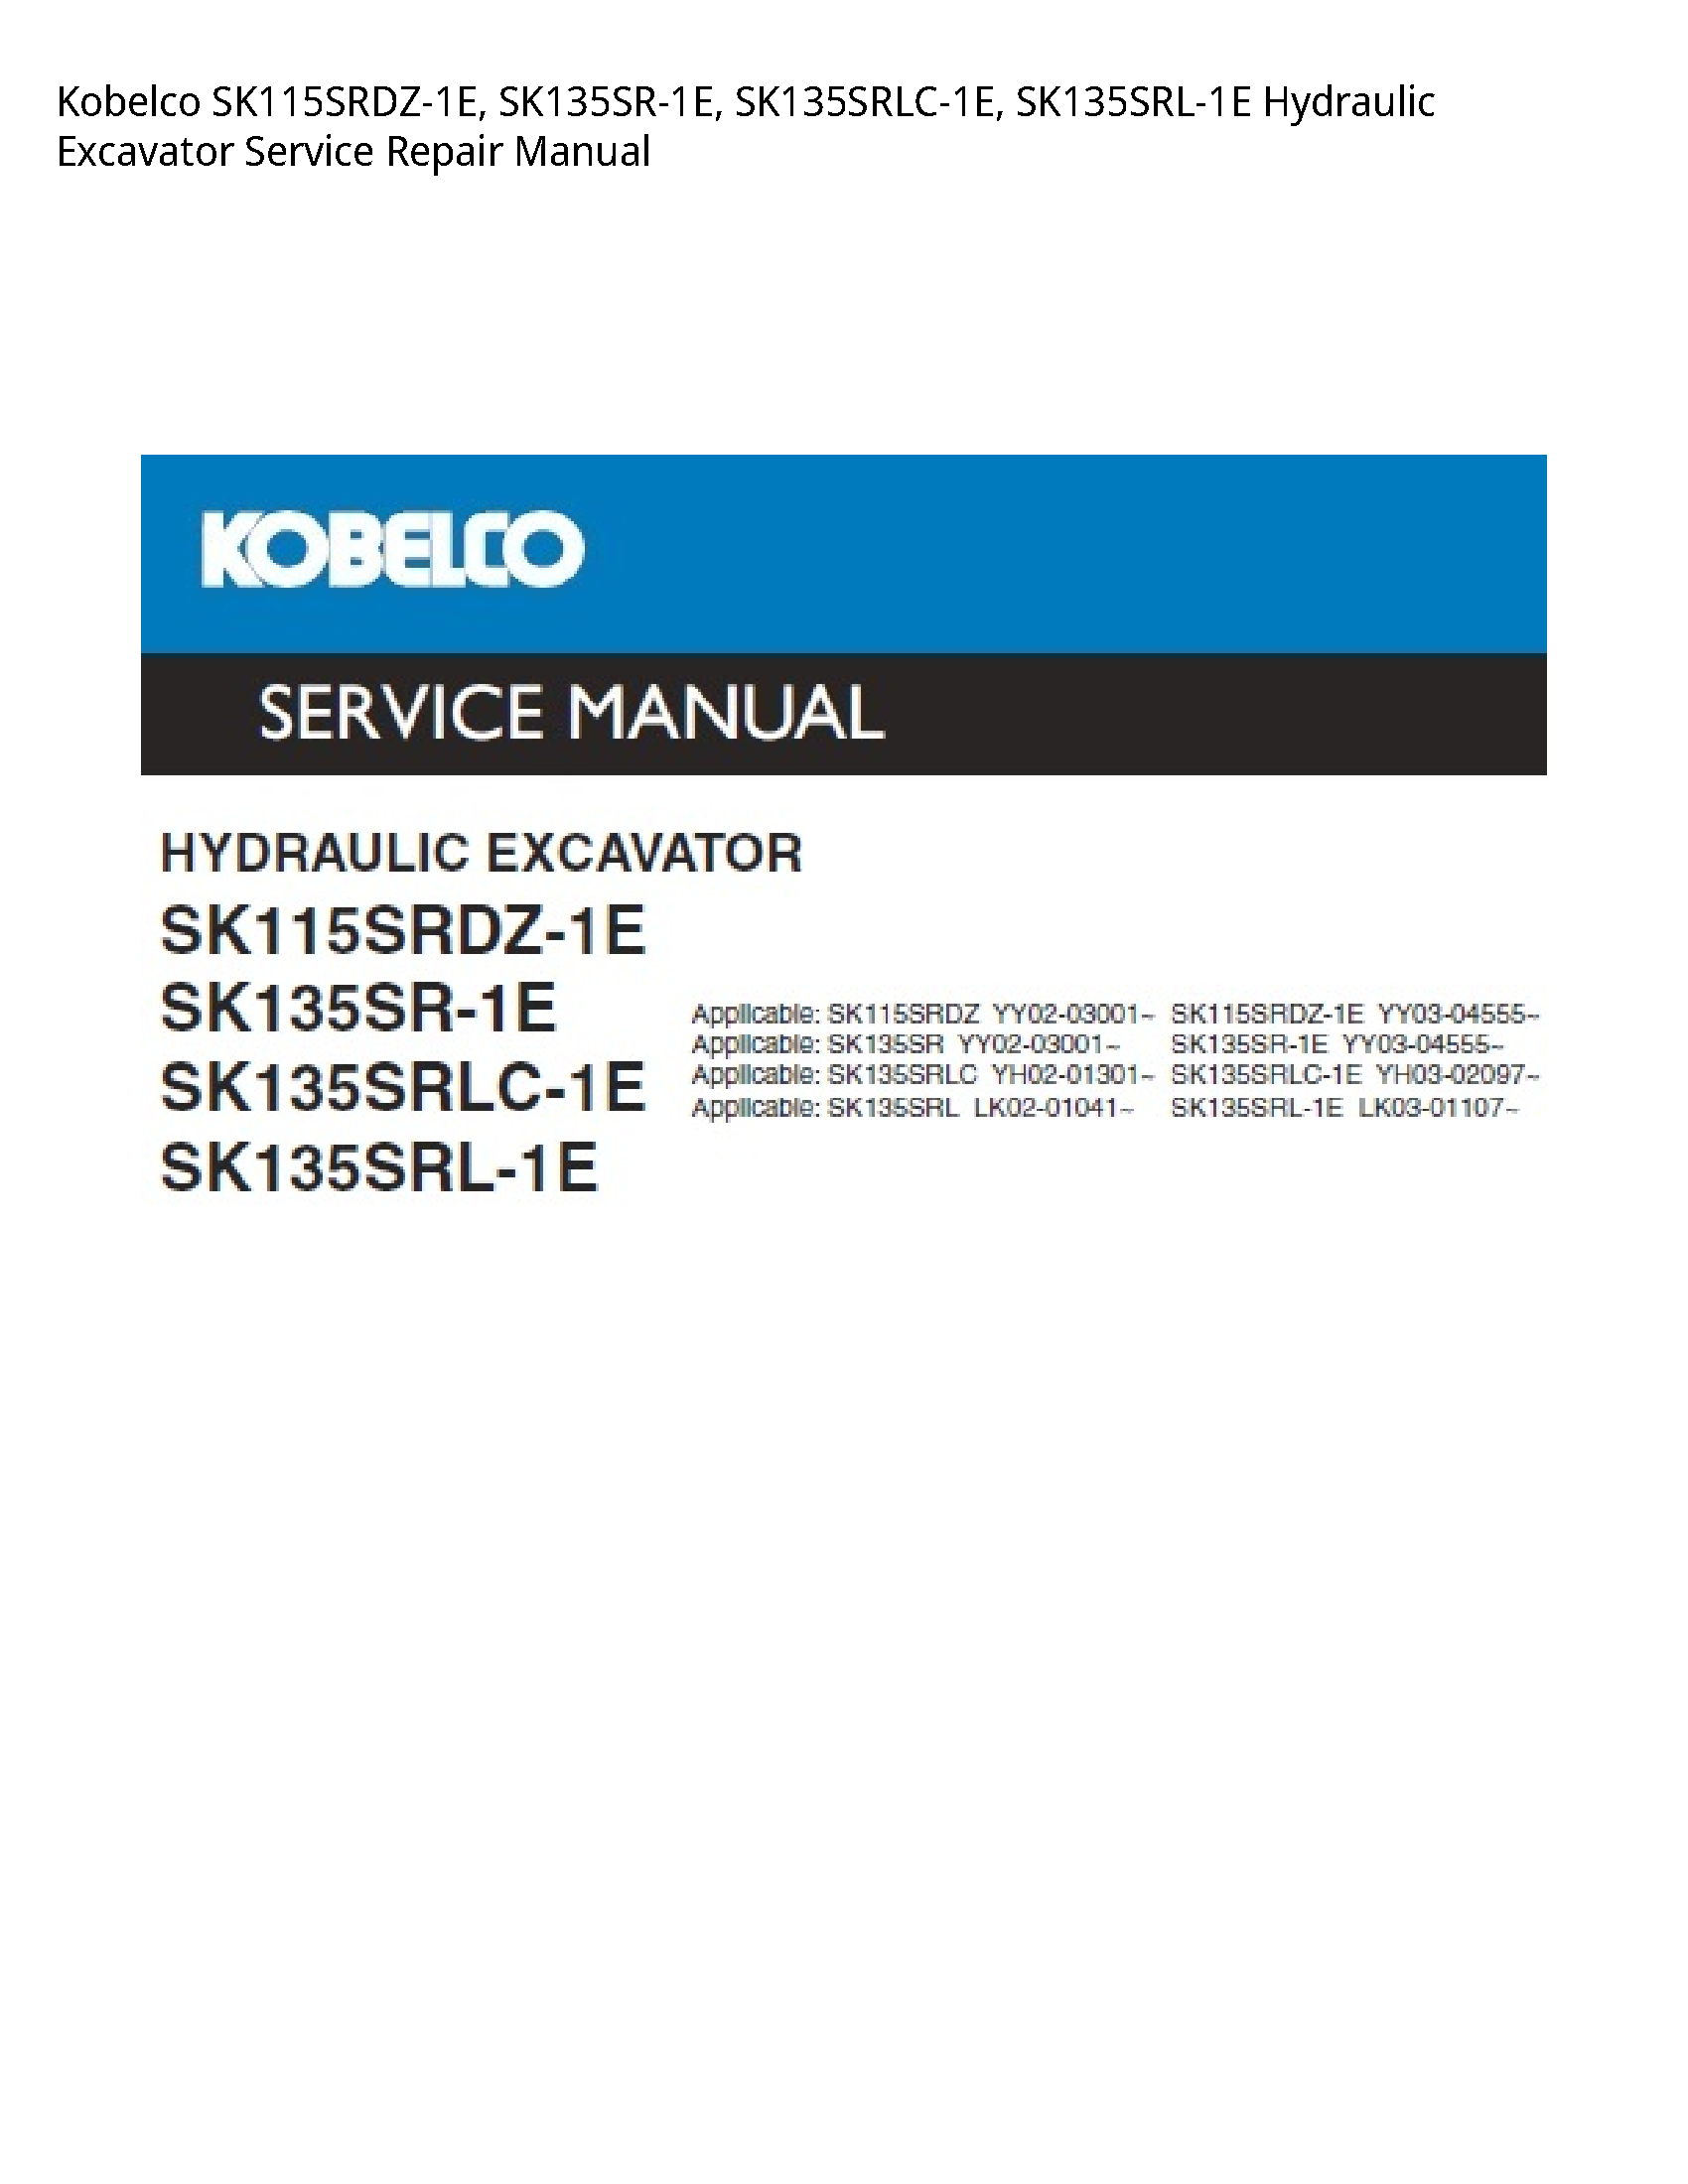 Kobelco SK115SRDZ-1E Hydraulic Excavator manual